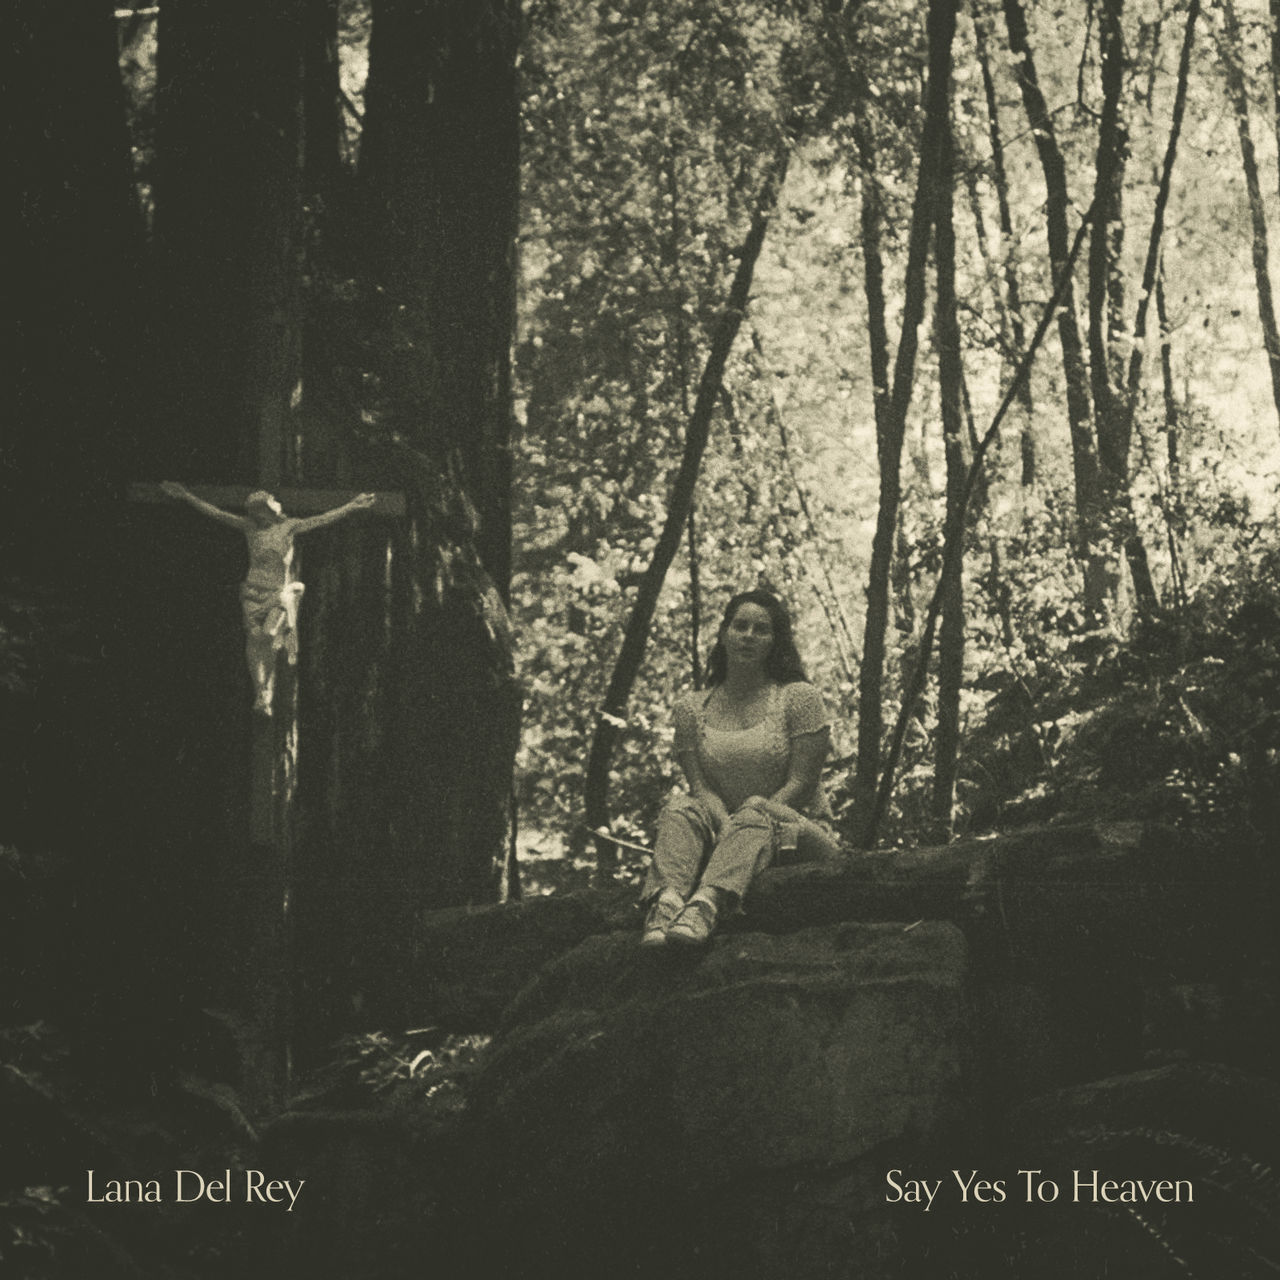 Lana Del Rey - Love  Back Cover by rodrigomndzz on DeviantArt